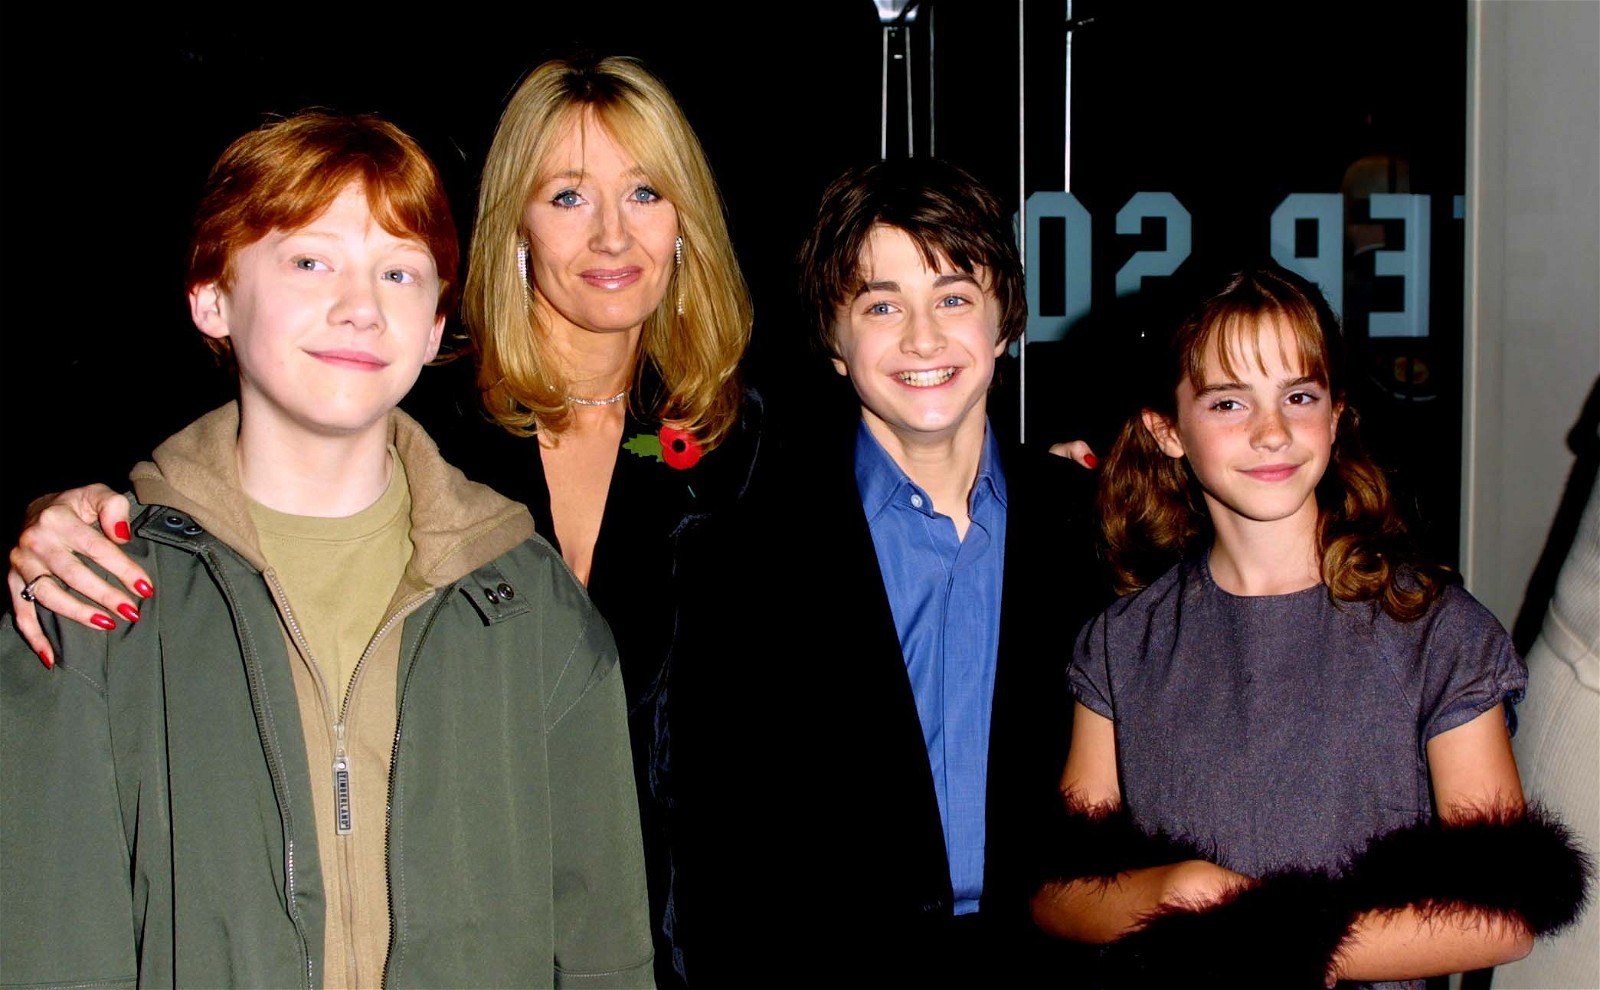 J.K. Rowling with Daniel Radcliffe, Emma Watson, and Rupert Grint